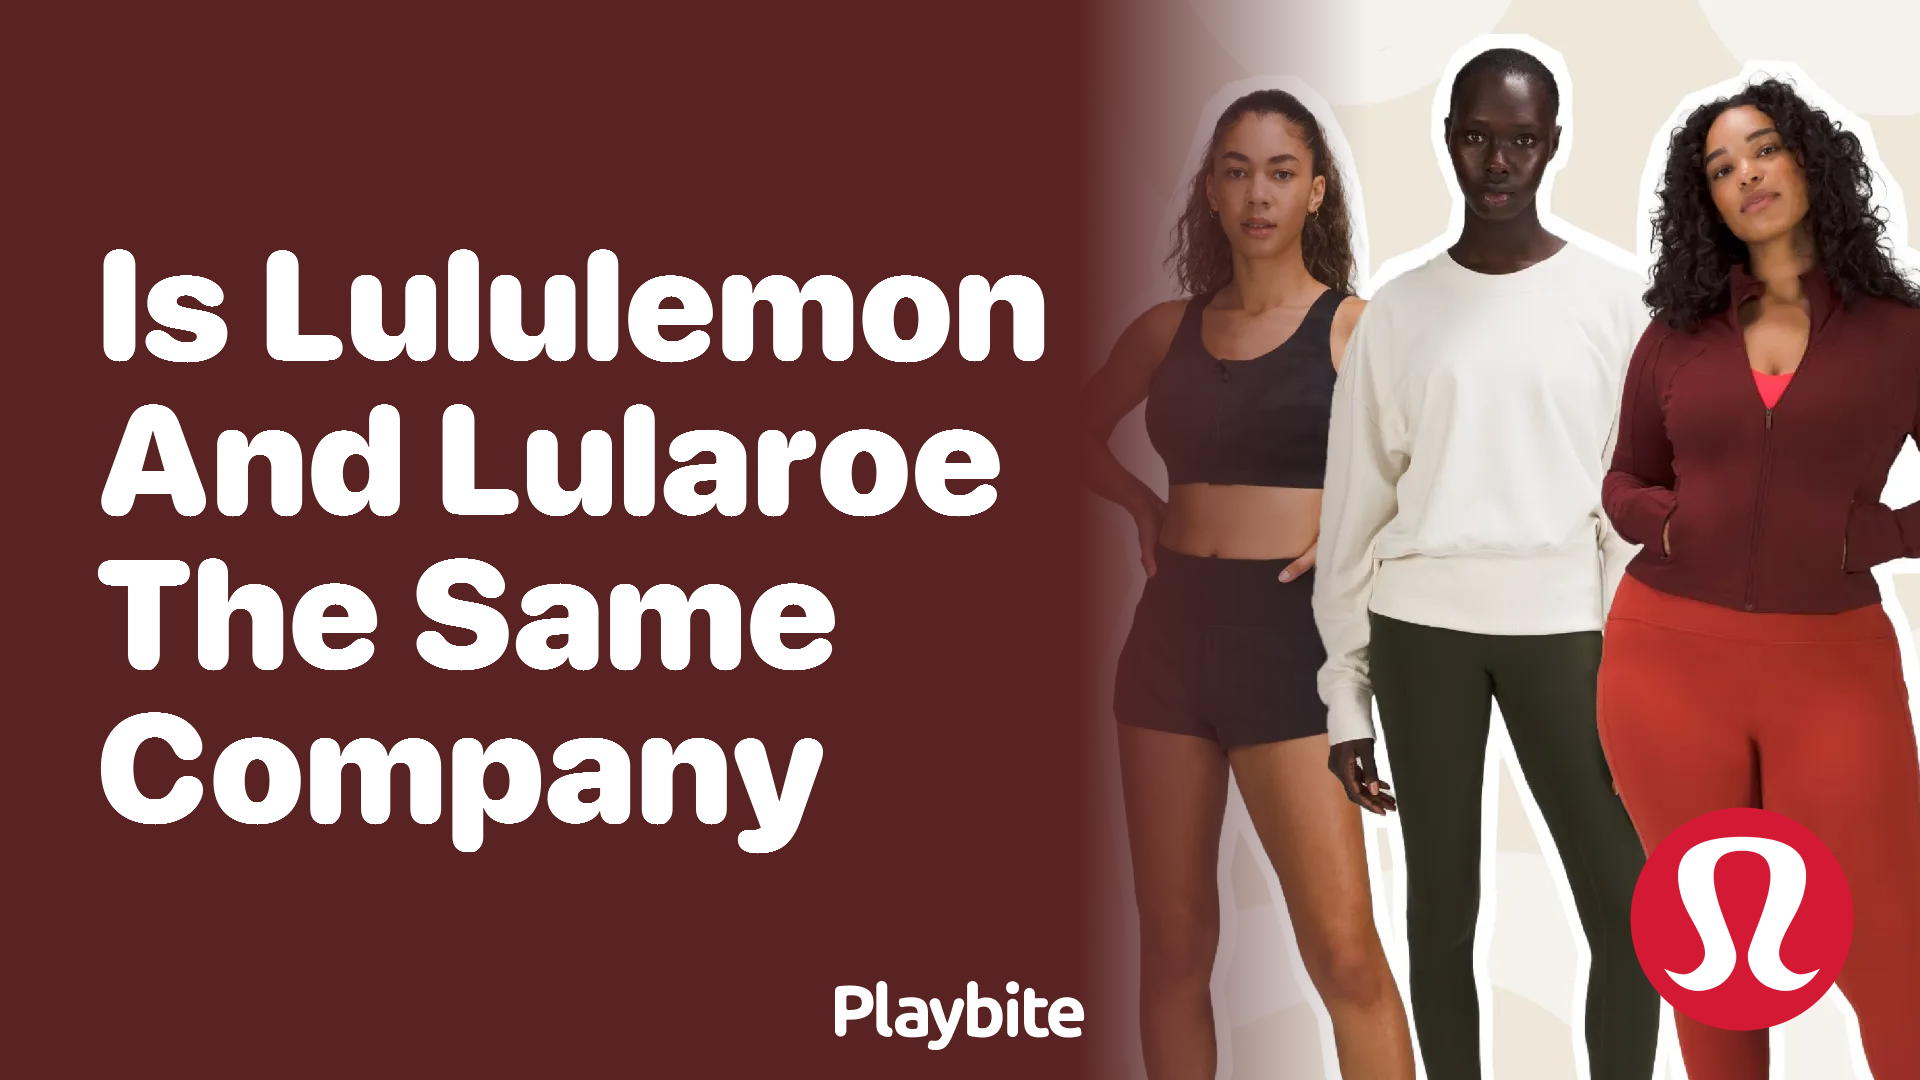 Luluroe Dress, LuLaRoe is a United States-based multi-level